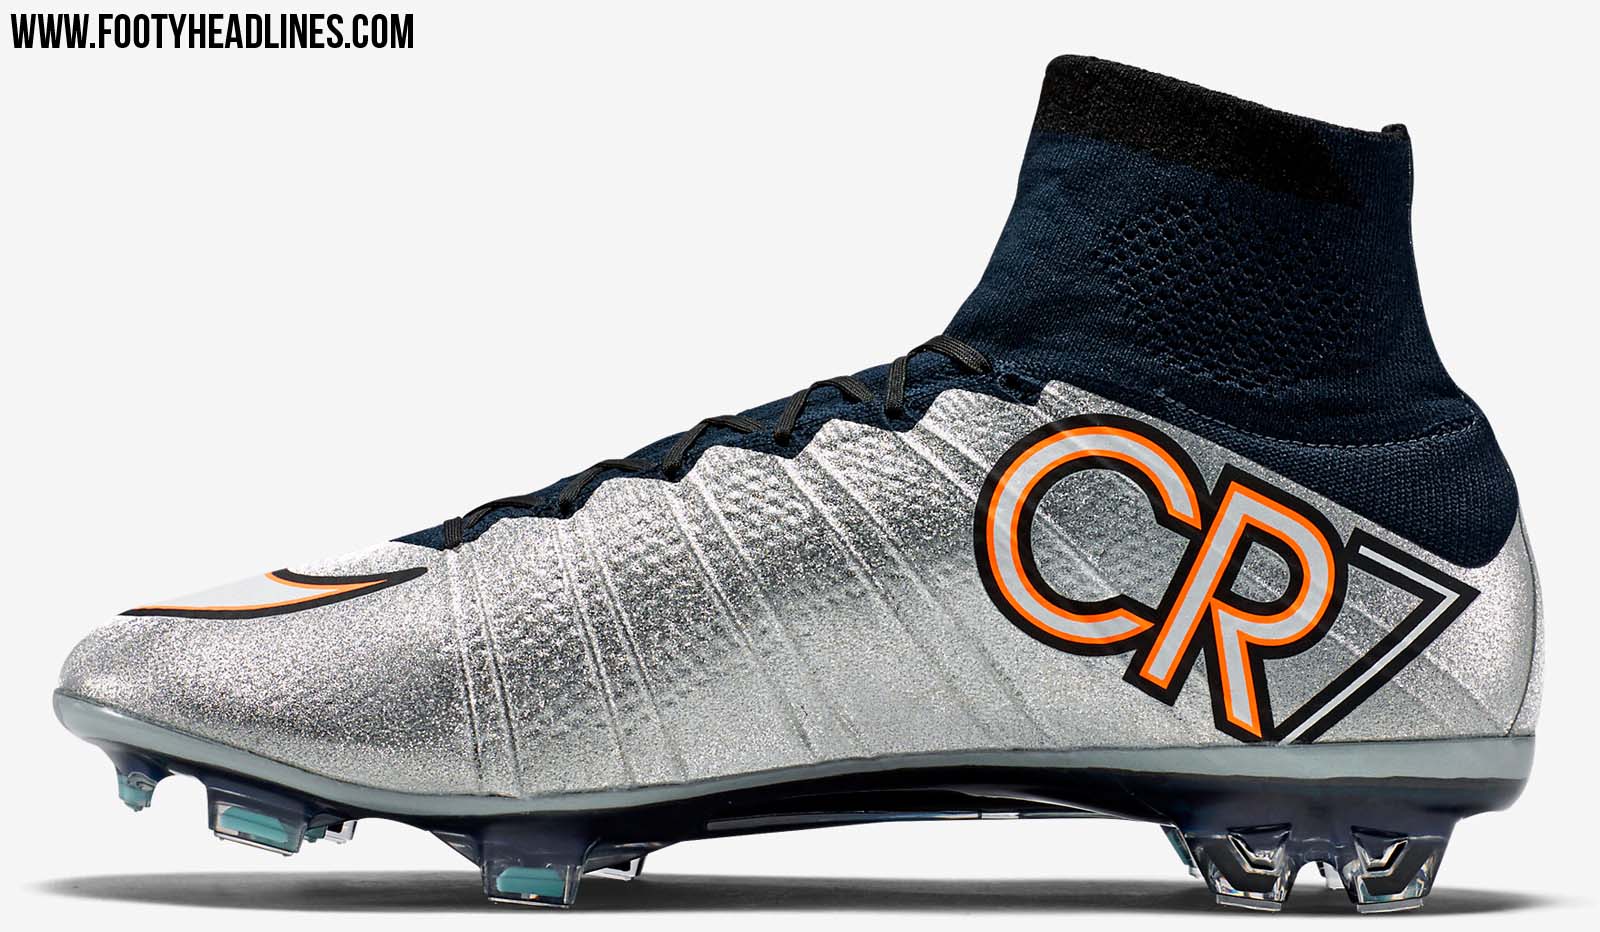 Mercurial Superfly Cristiano Ronaldo Silverware 2015 Boots Released - Footy Headlines